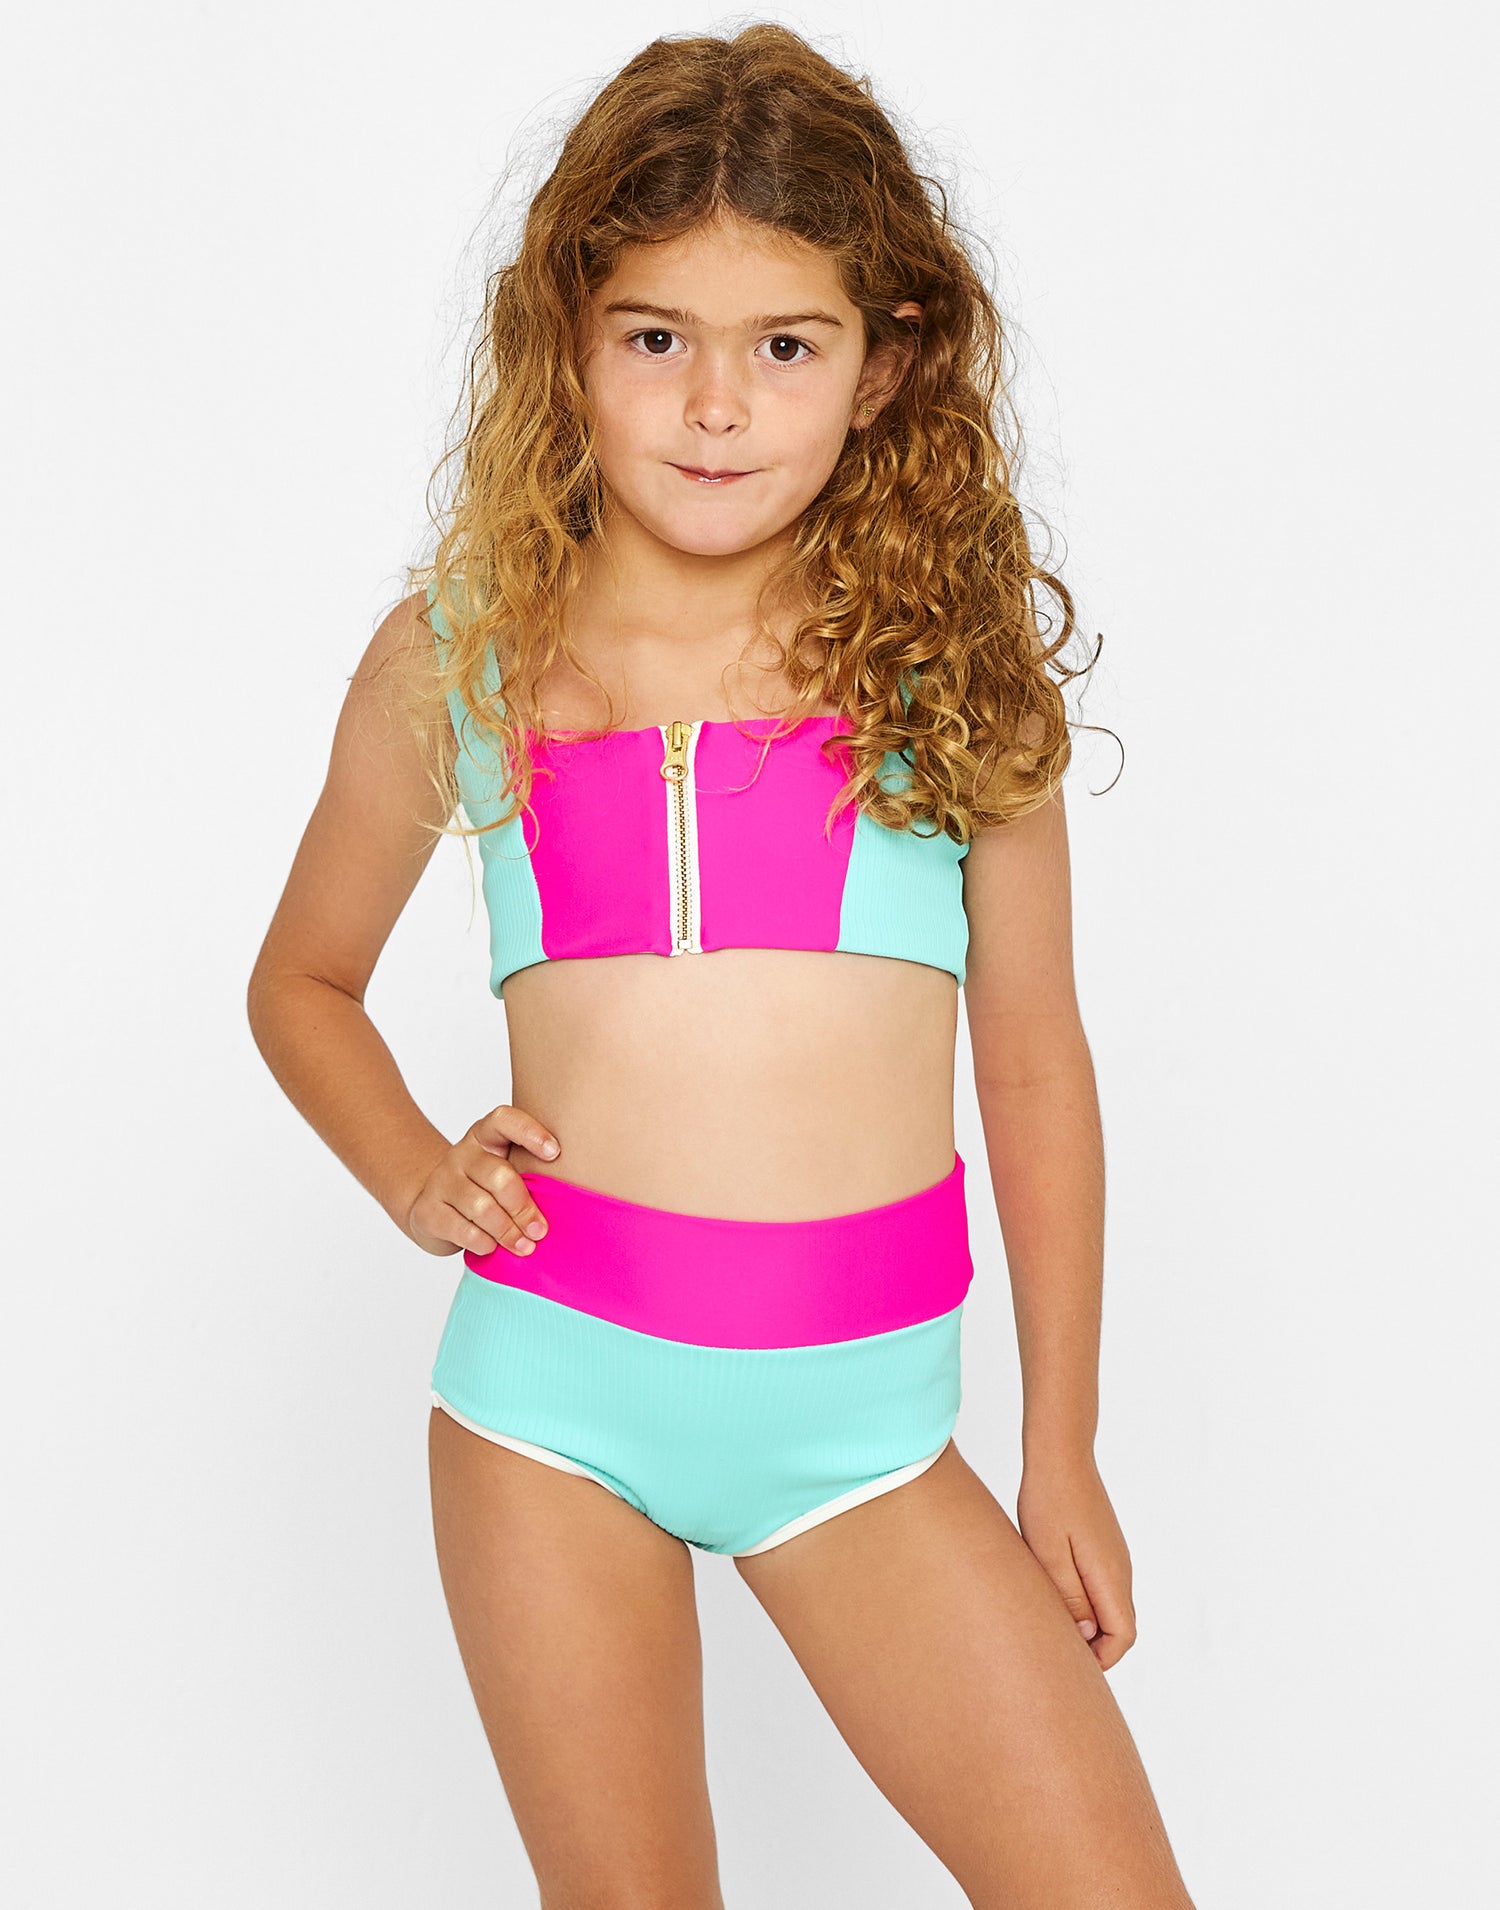 Della Kids Swim Set in Aqua/Pink/Green - Front View